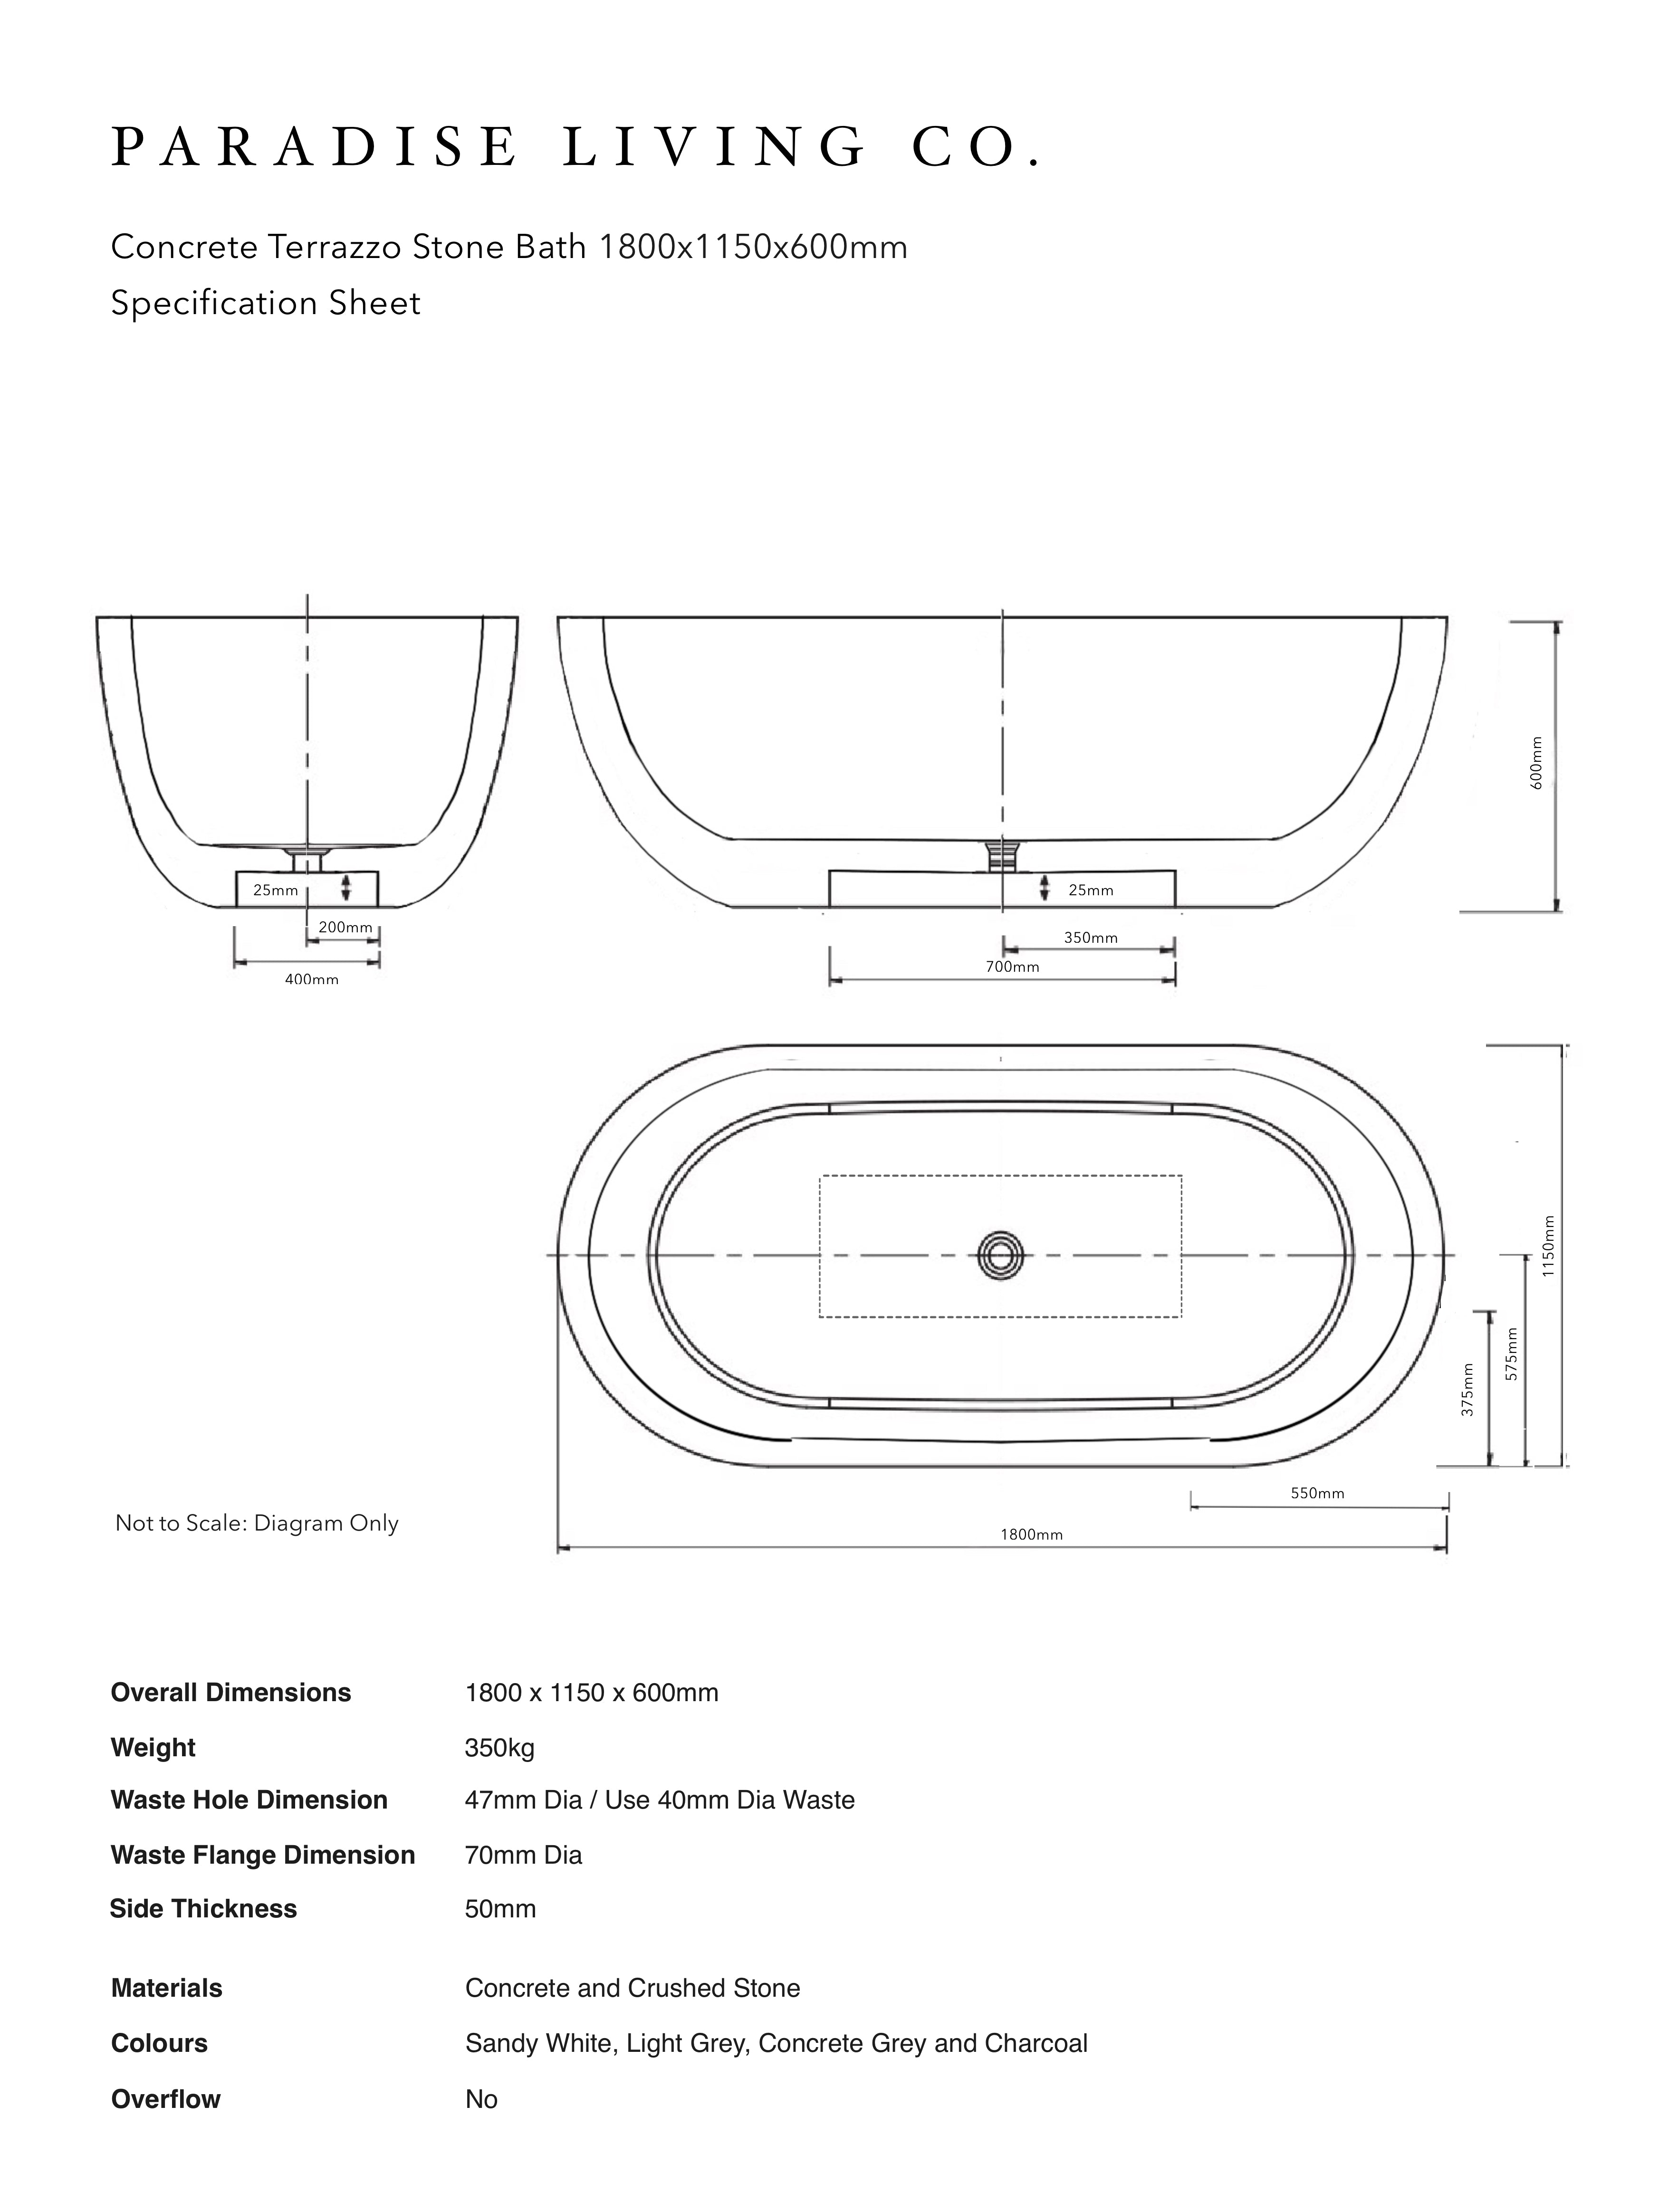 Oval Concrete Terrazzo Stone Bath 1800x1150x600mm - Mid Grey